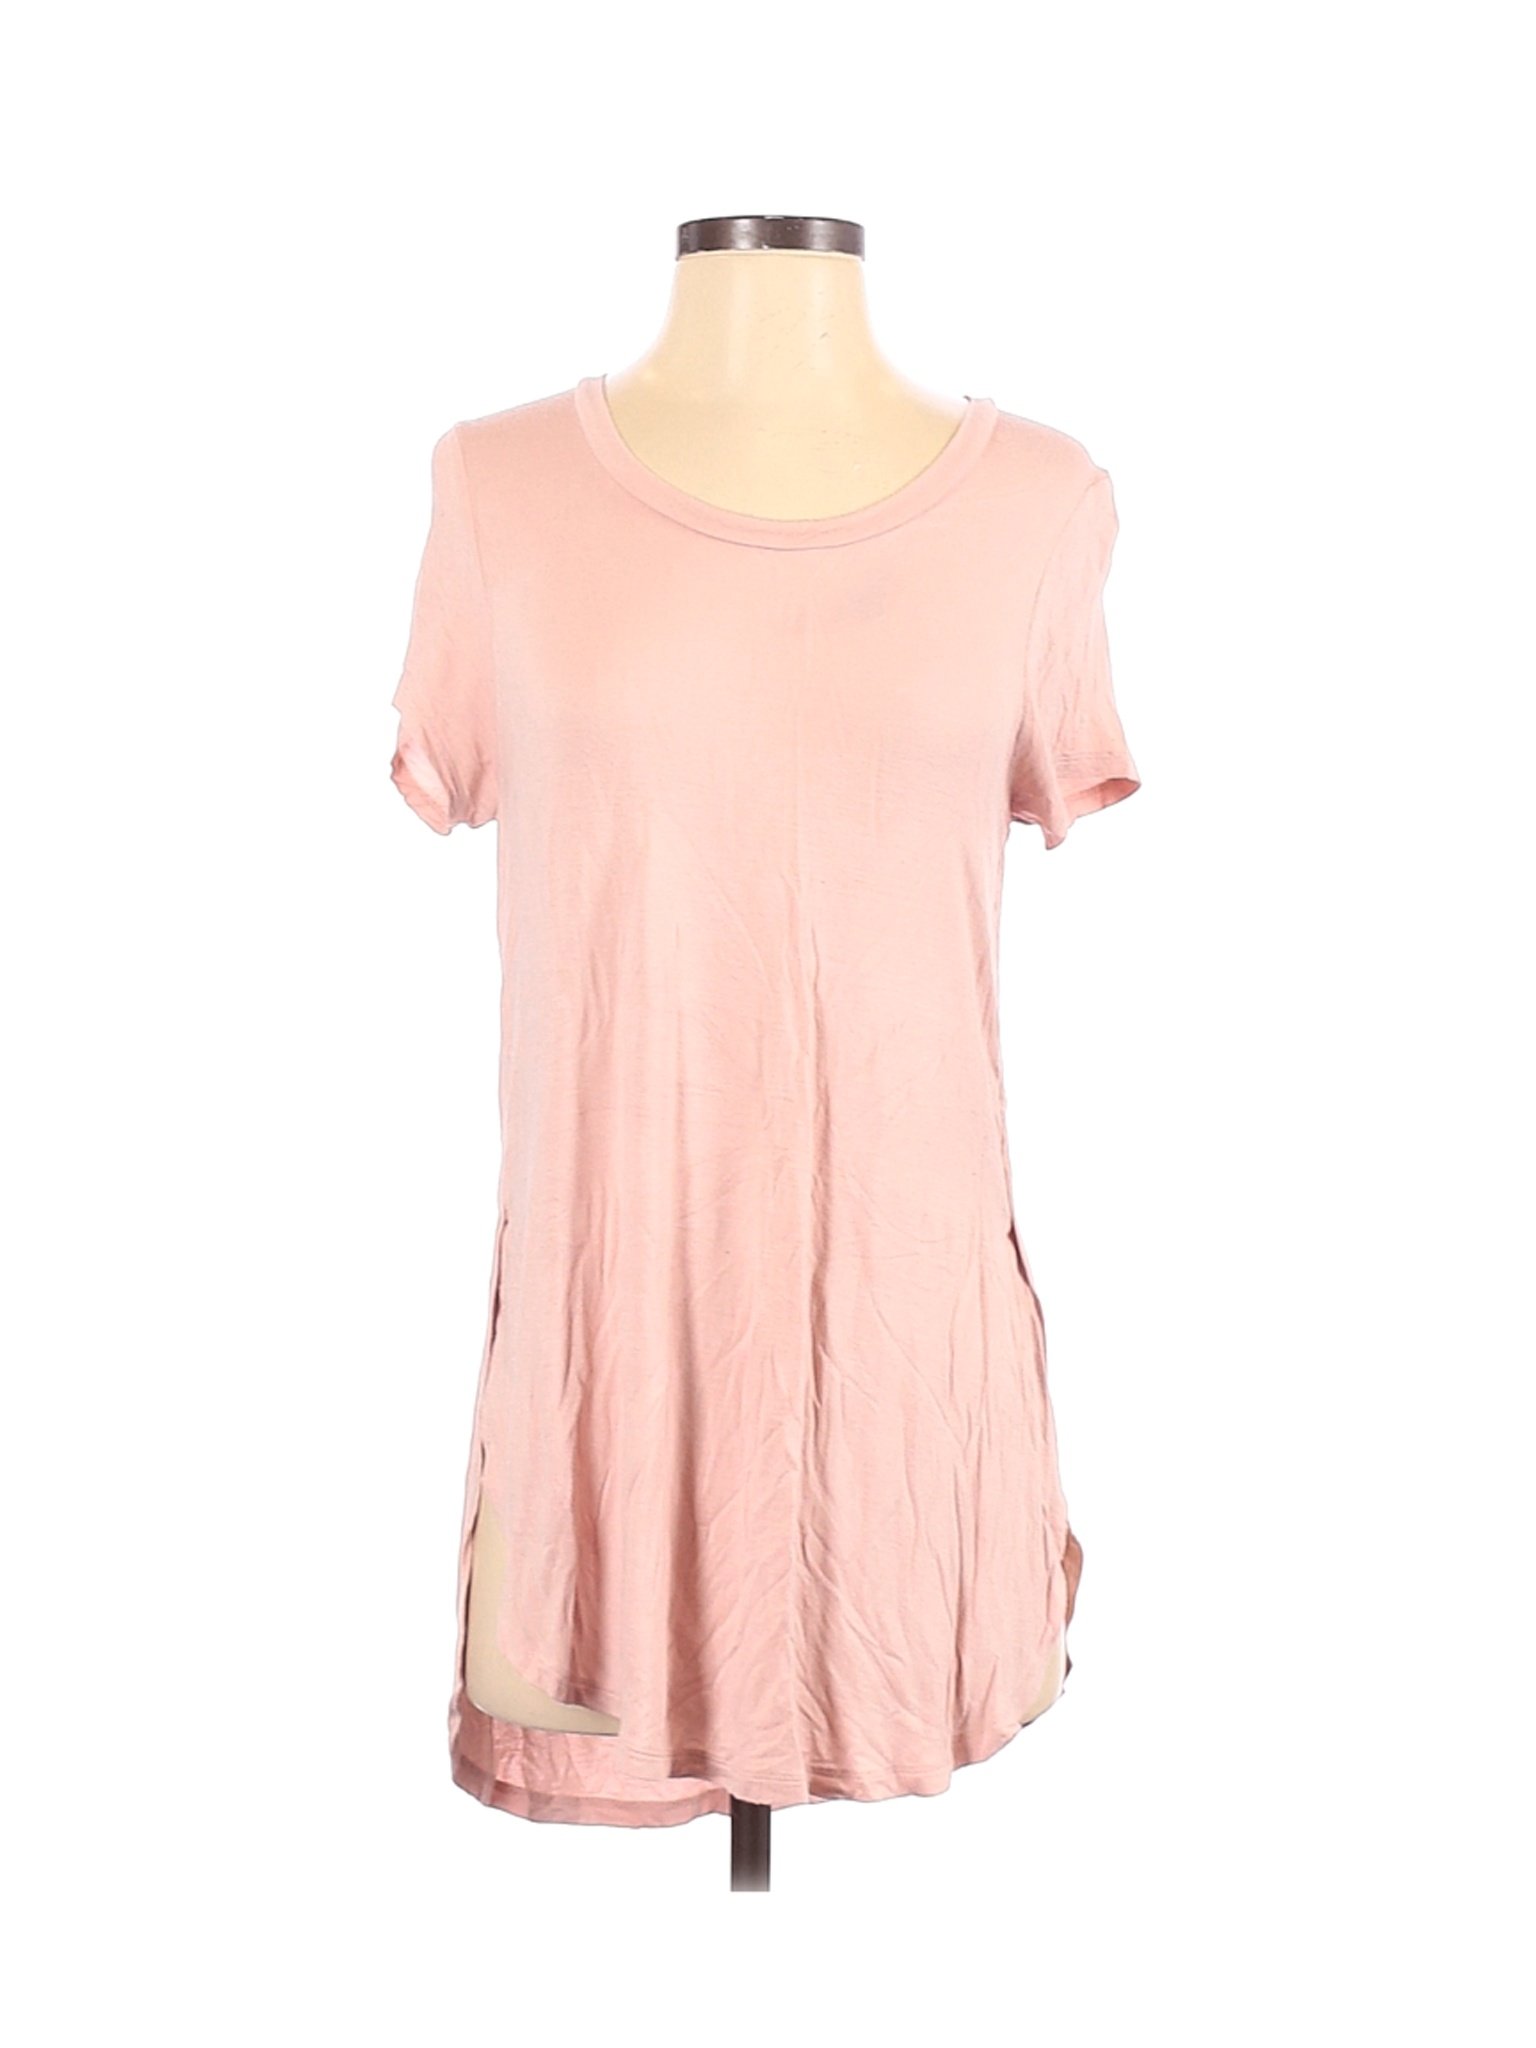 Pink Rose Women Pink Short Sleeve T-Shirt S | eBay